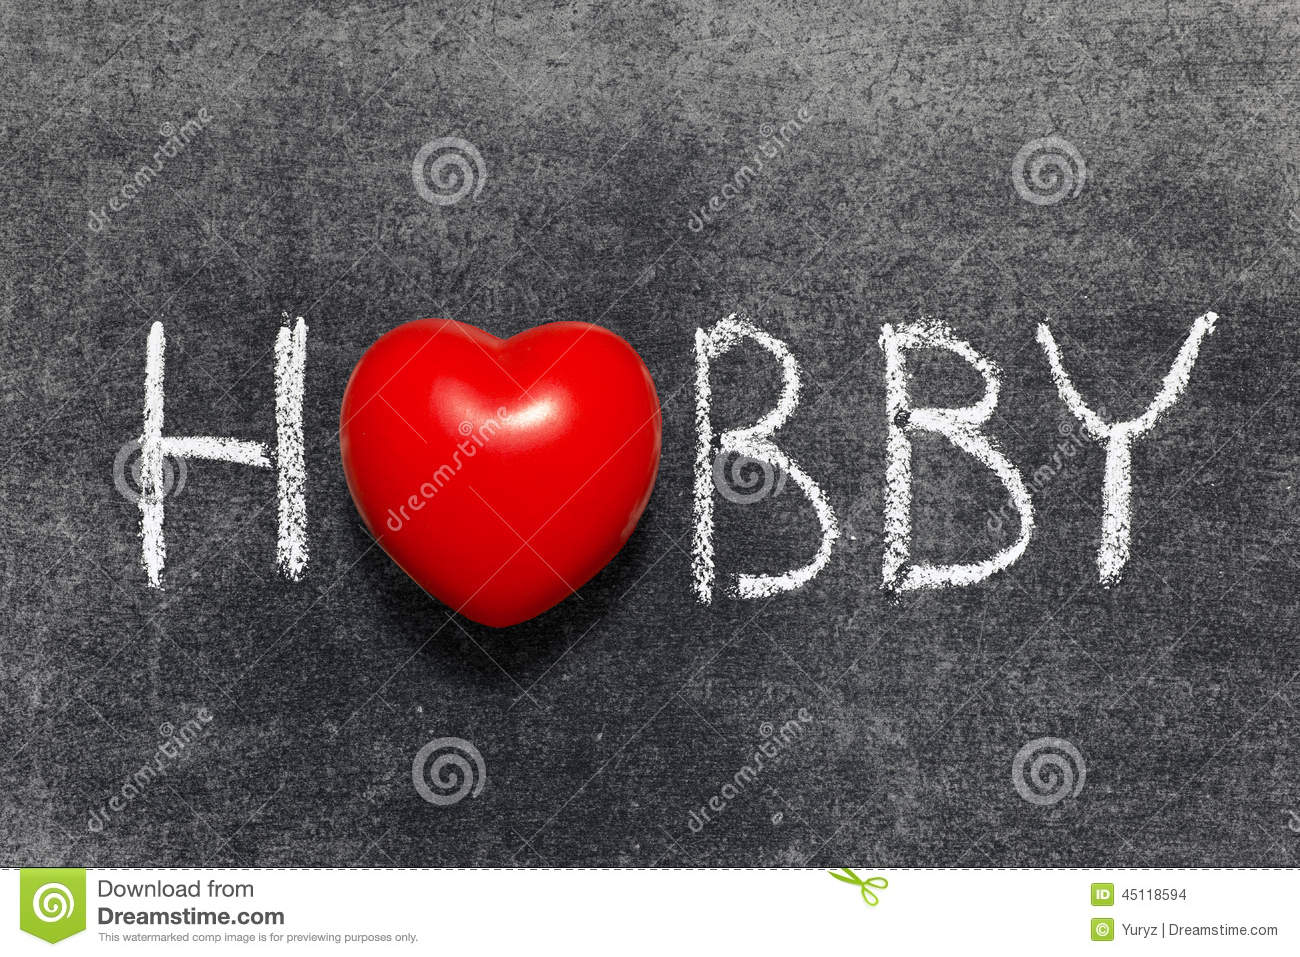 http://www.dreamstime.com/stock-images-hobby-word-handwritten-blackboard-heart-symbol-o-image45118594